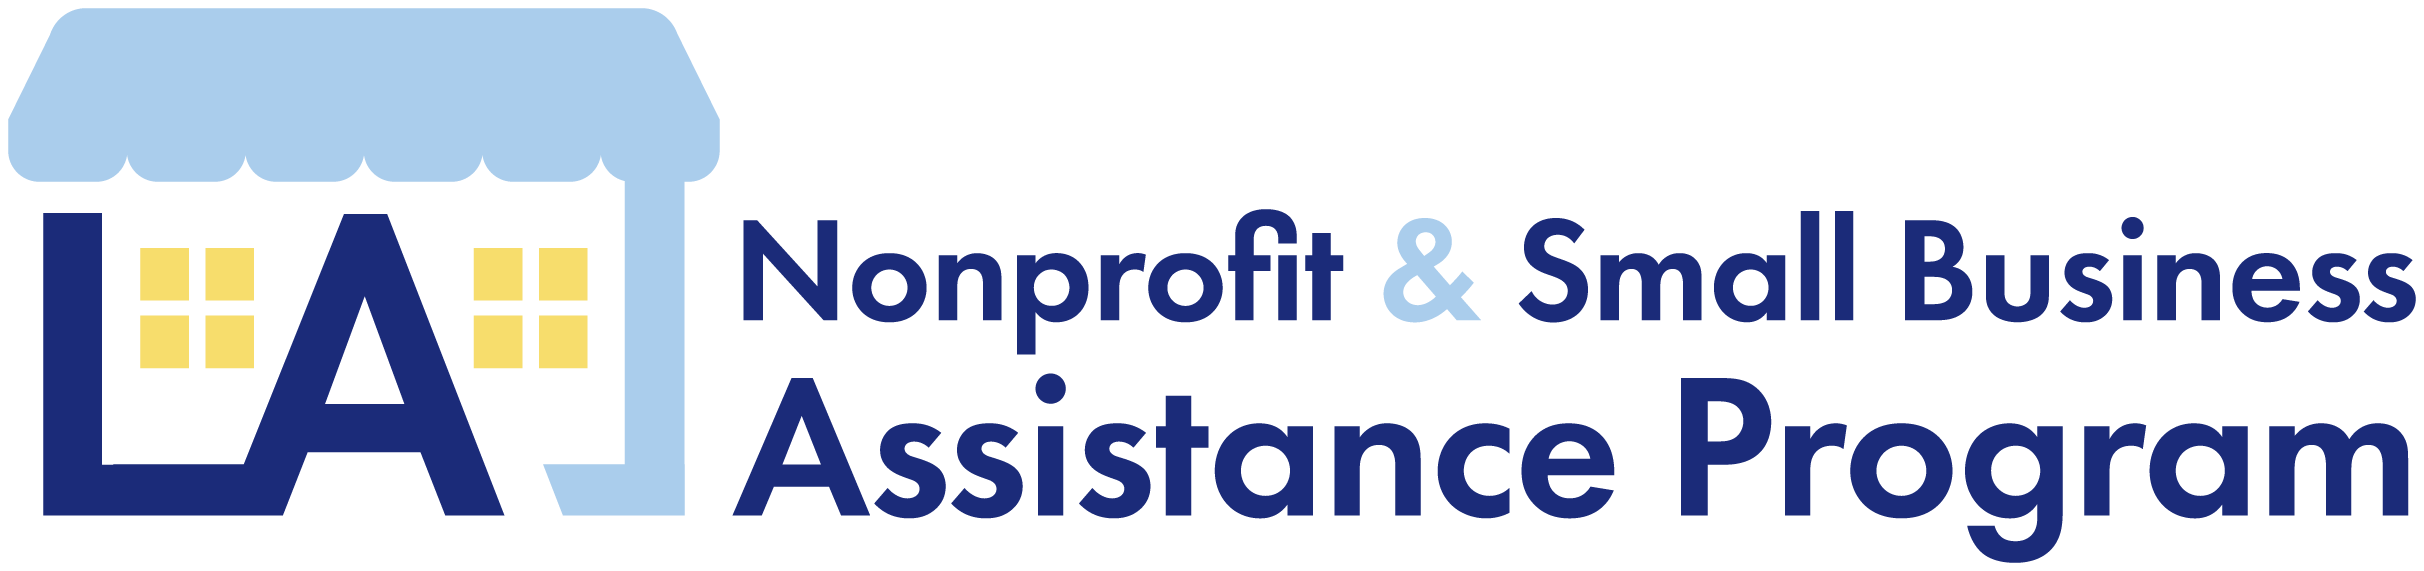 Small Business & Nonprofit Assistance Program